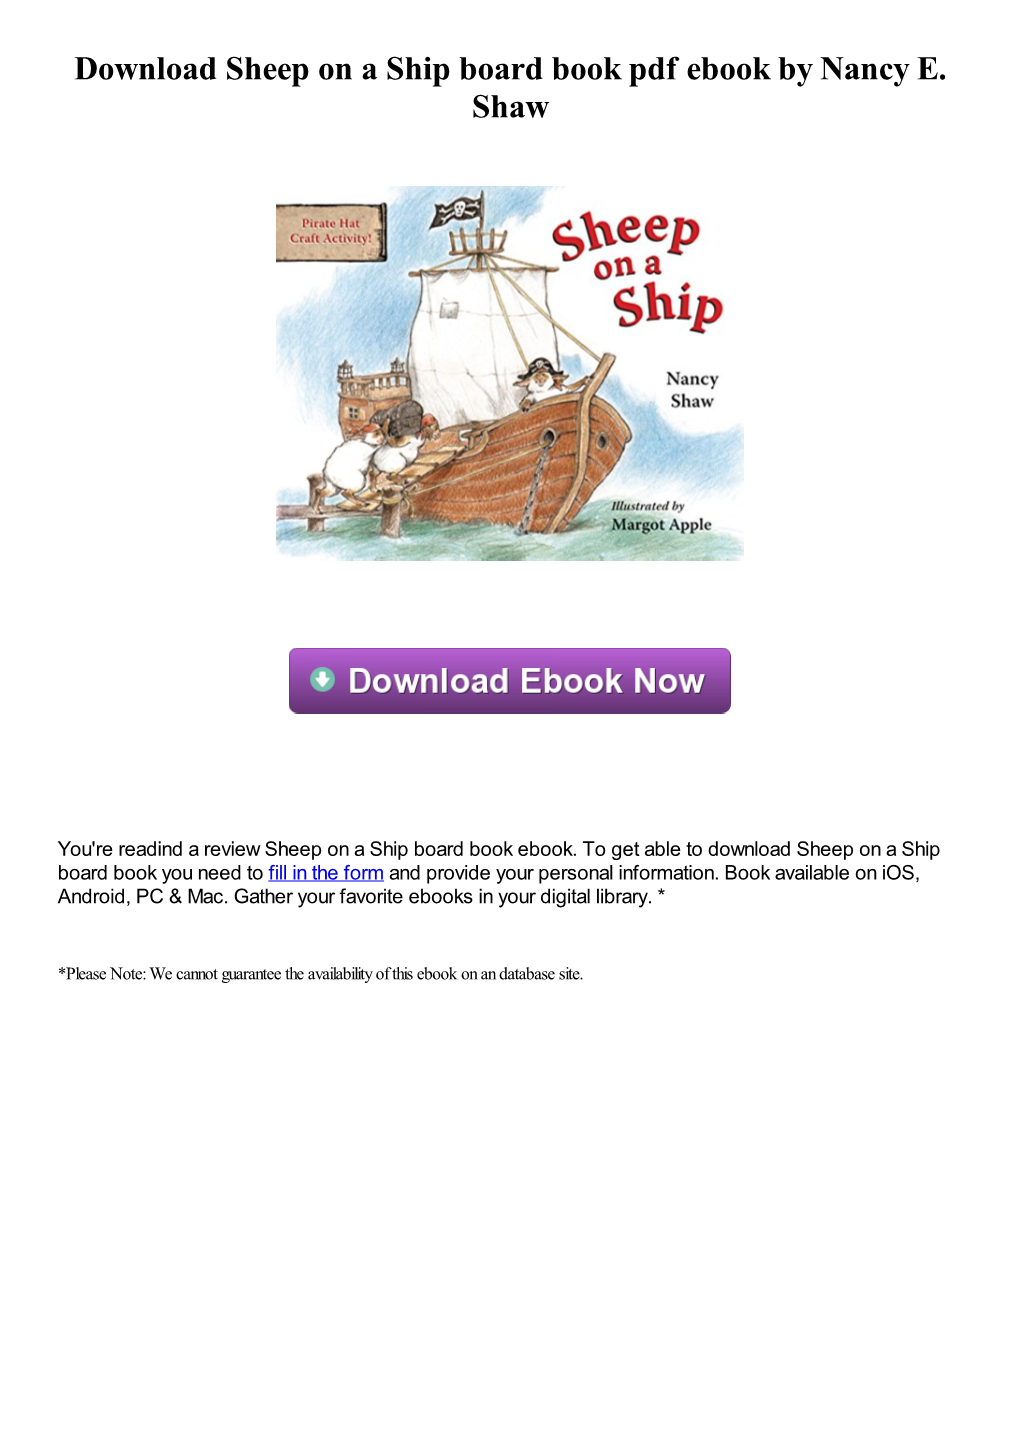 Download Sheep on a Ship Board Book Pdf Ebook by Nancy E. Shaw